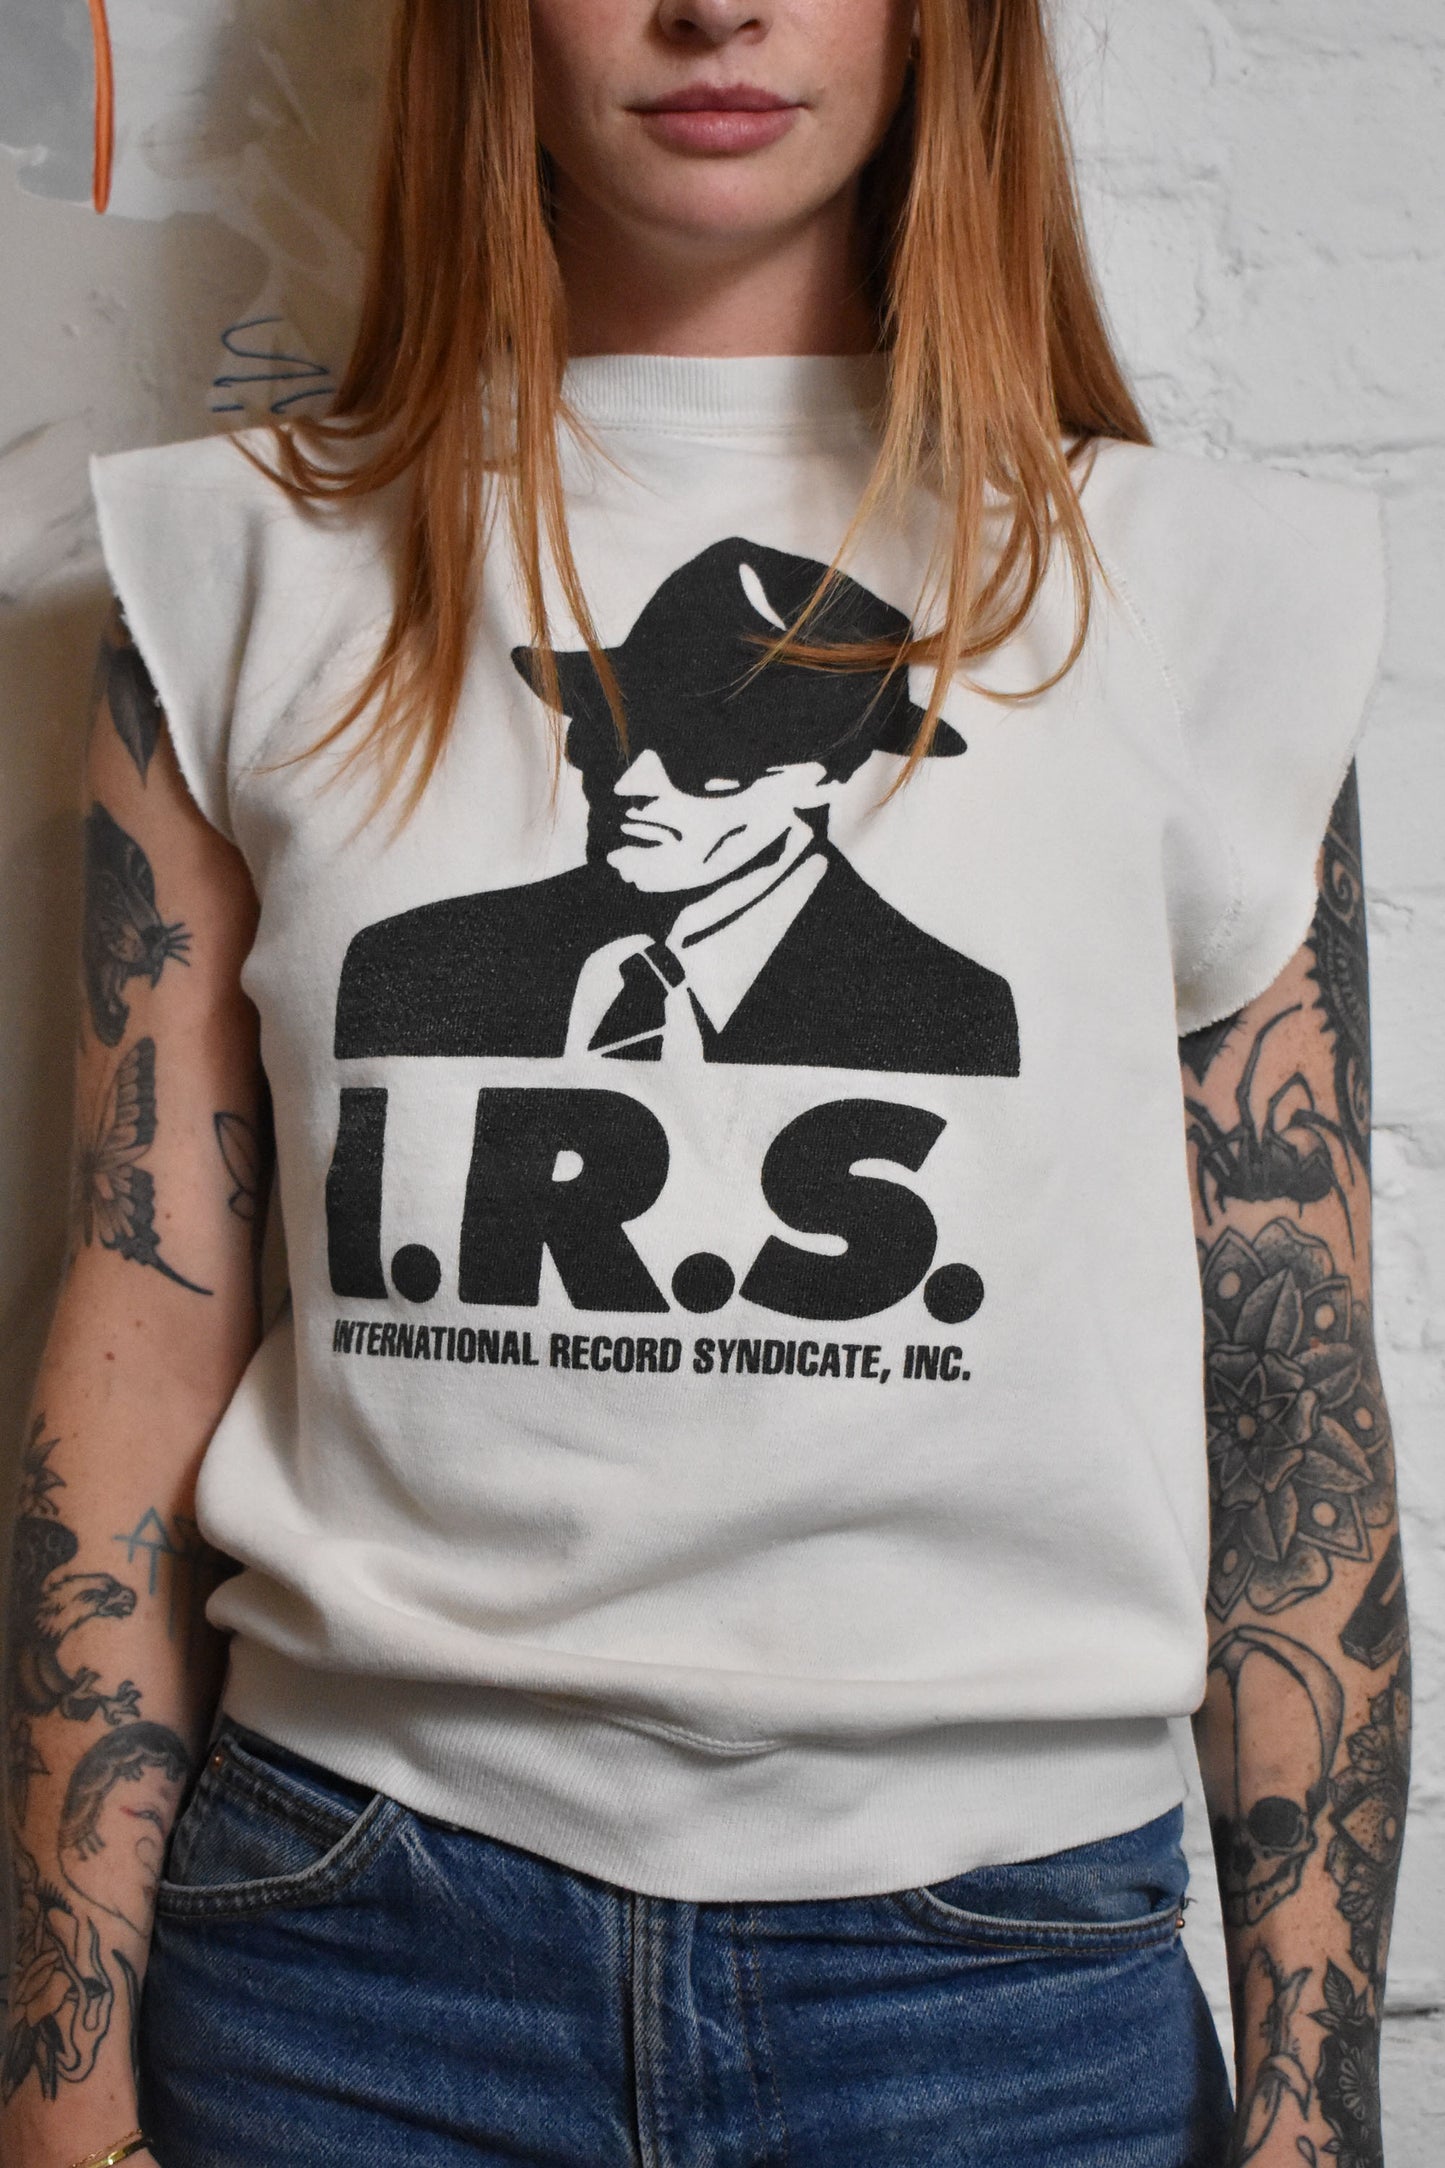 Vintage 1980s "I.R.S." International Record Syndicate Cropped Sleeve Sweatshirt